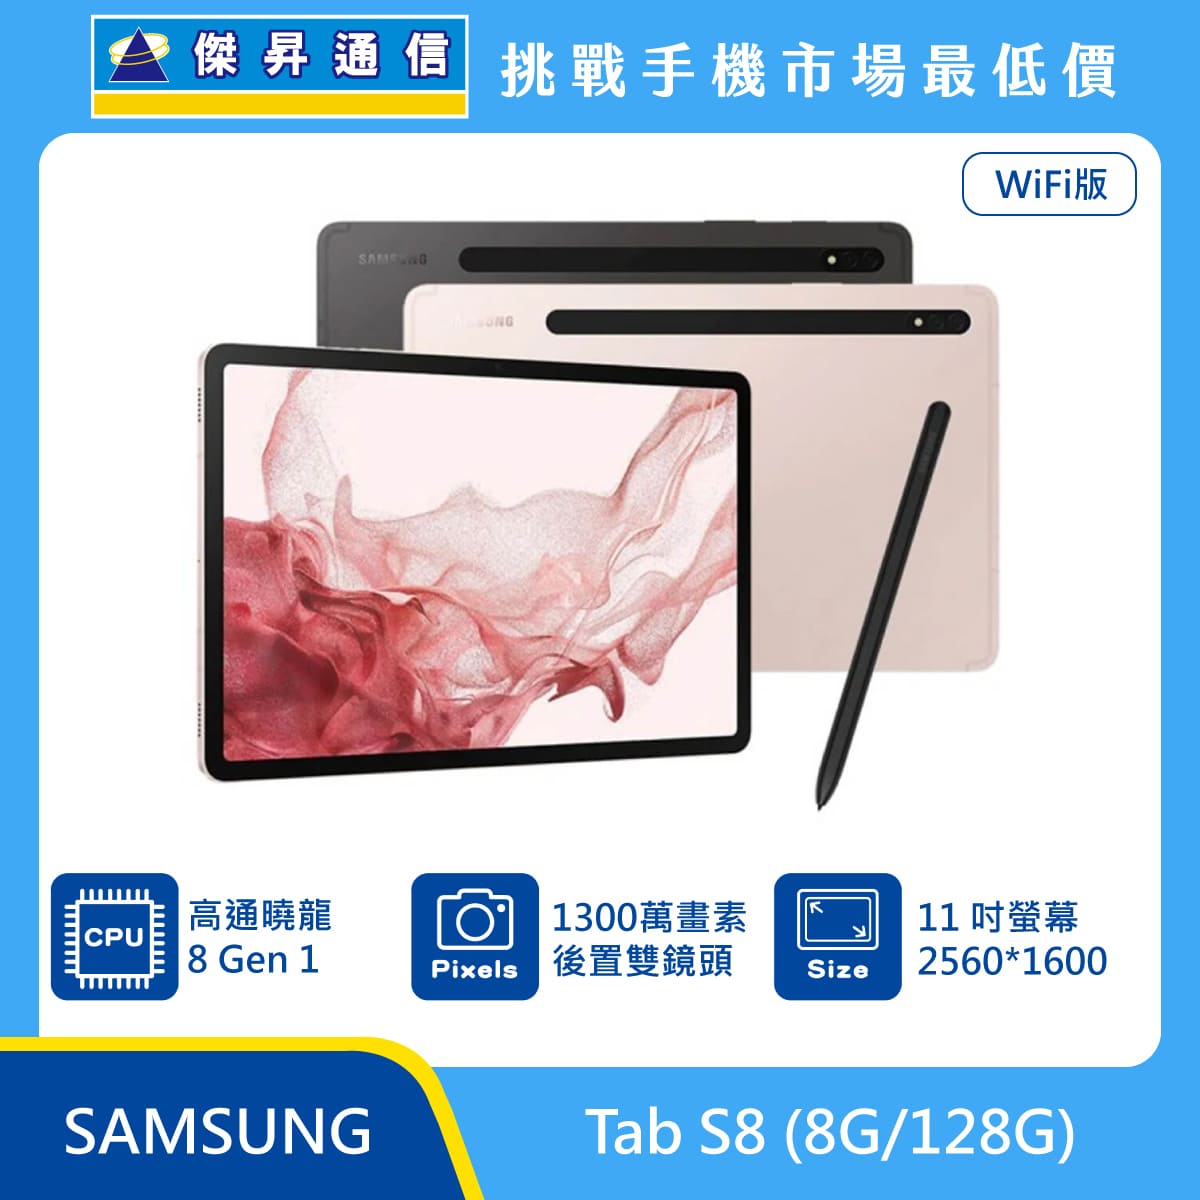 SAMSUNG 平板 Tab S8 Wi-Fi (8G/128G)